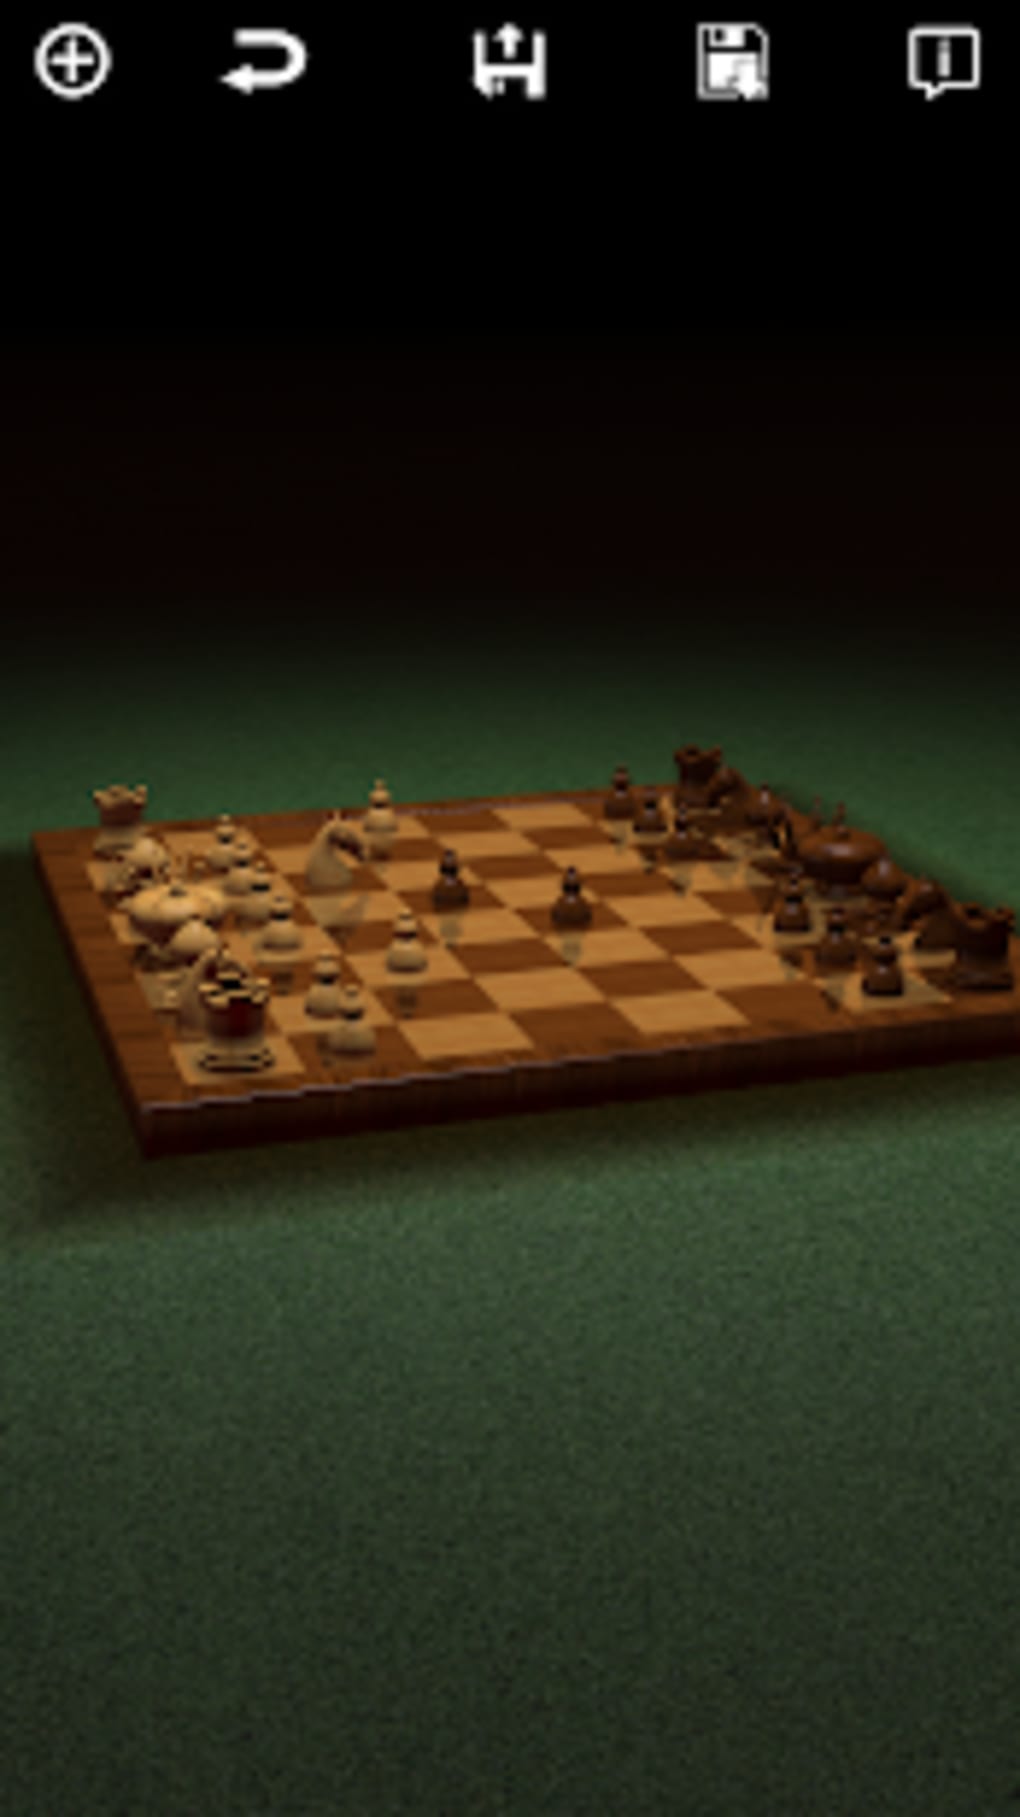 Titãs de xadrez 3D APK (Android Game) - Baixar Grátis